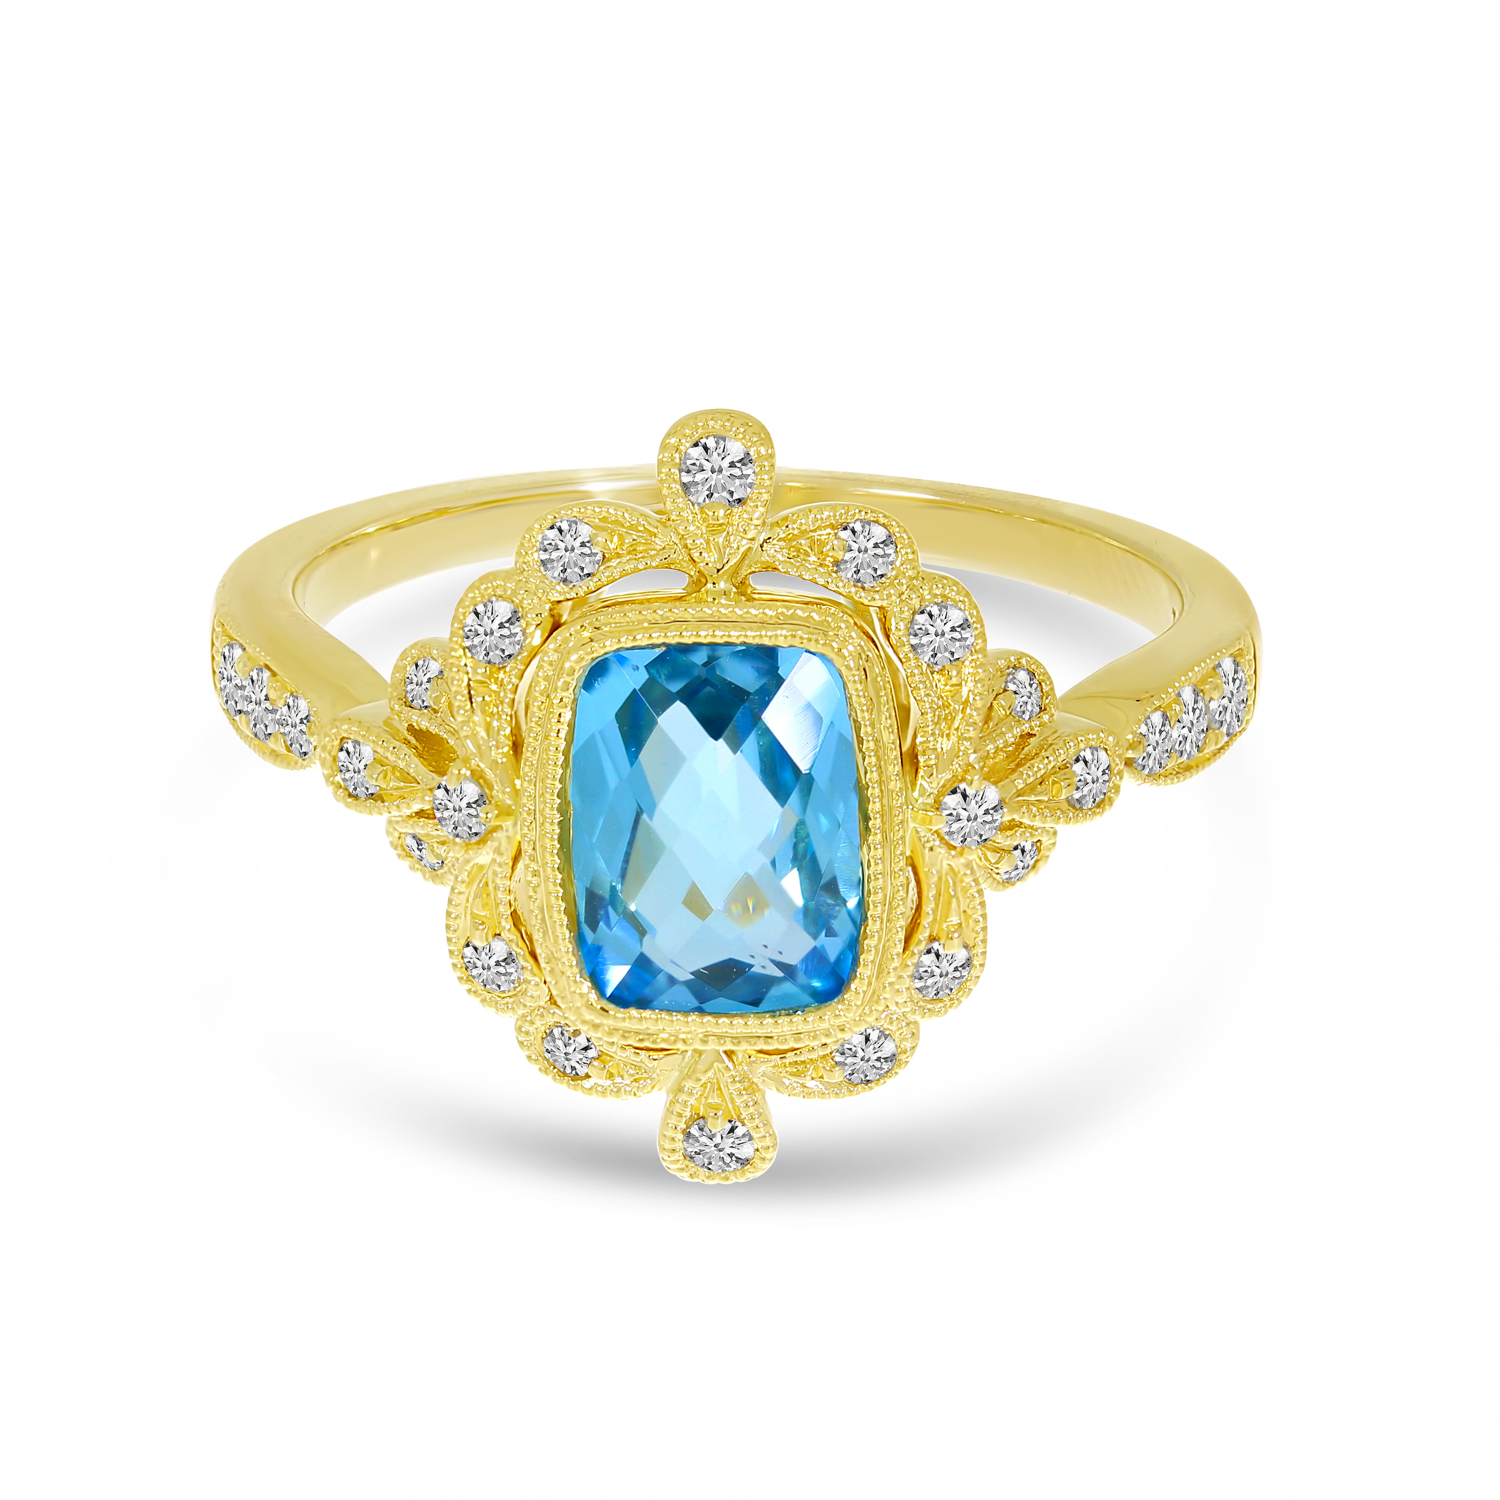 14K Yellow Gold Blue Topaz Cushion Ornate Diamond Millgrain Ring